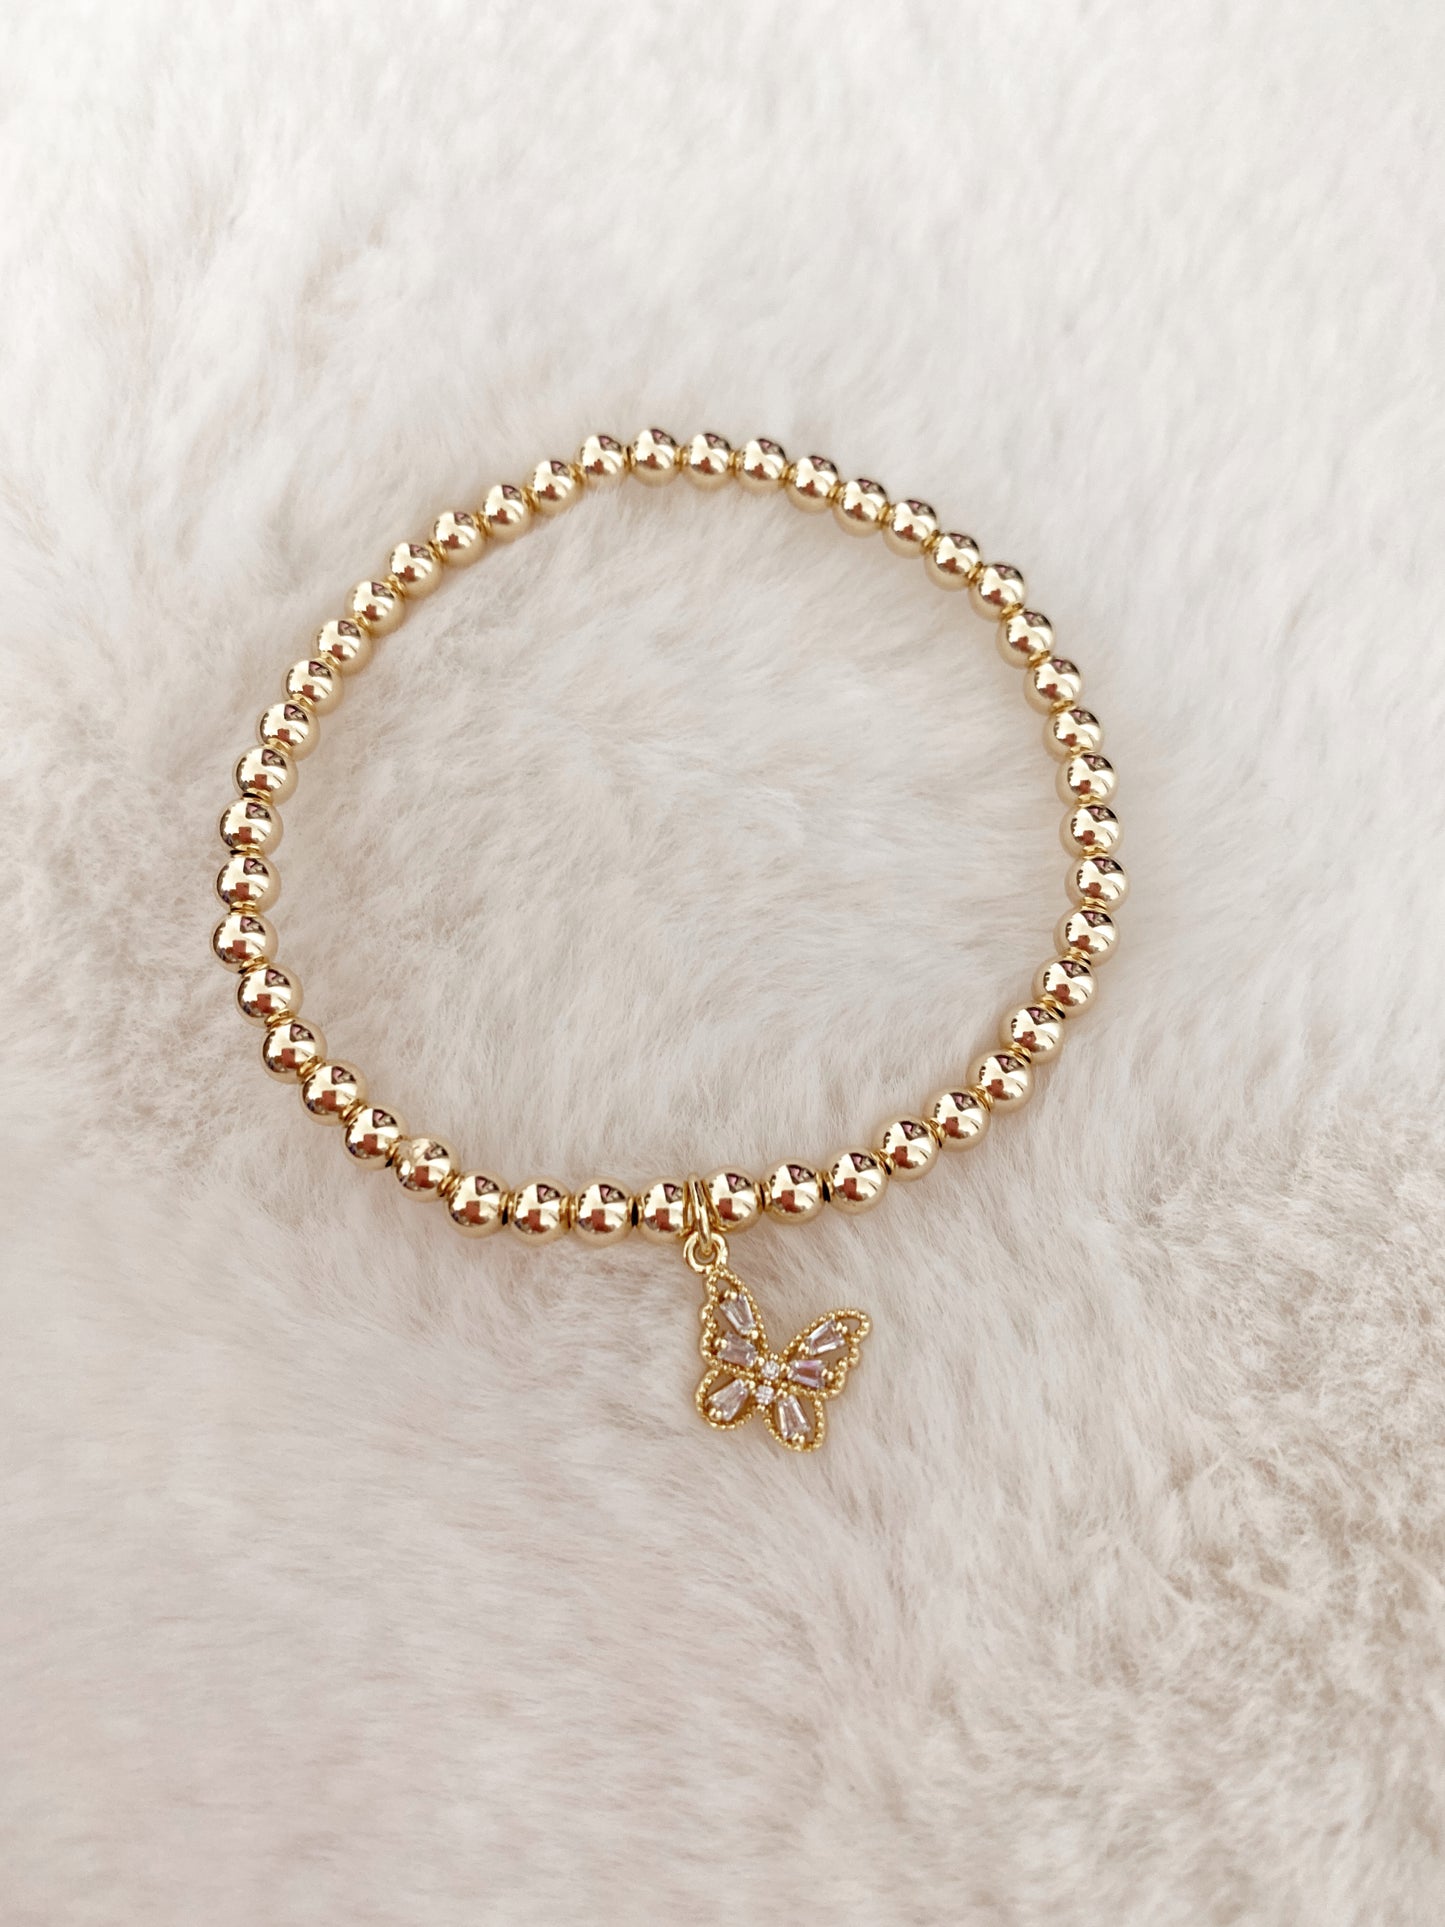 "You Give Me Butterflies" 14k gold filled beaded bracelet